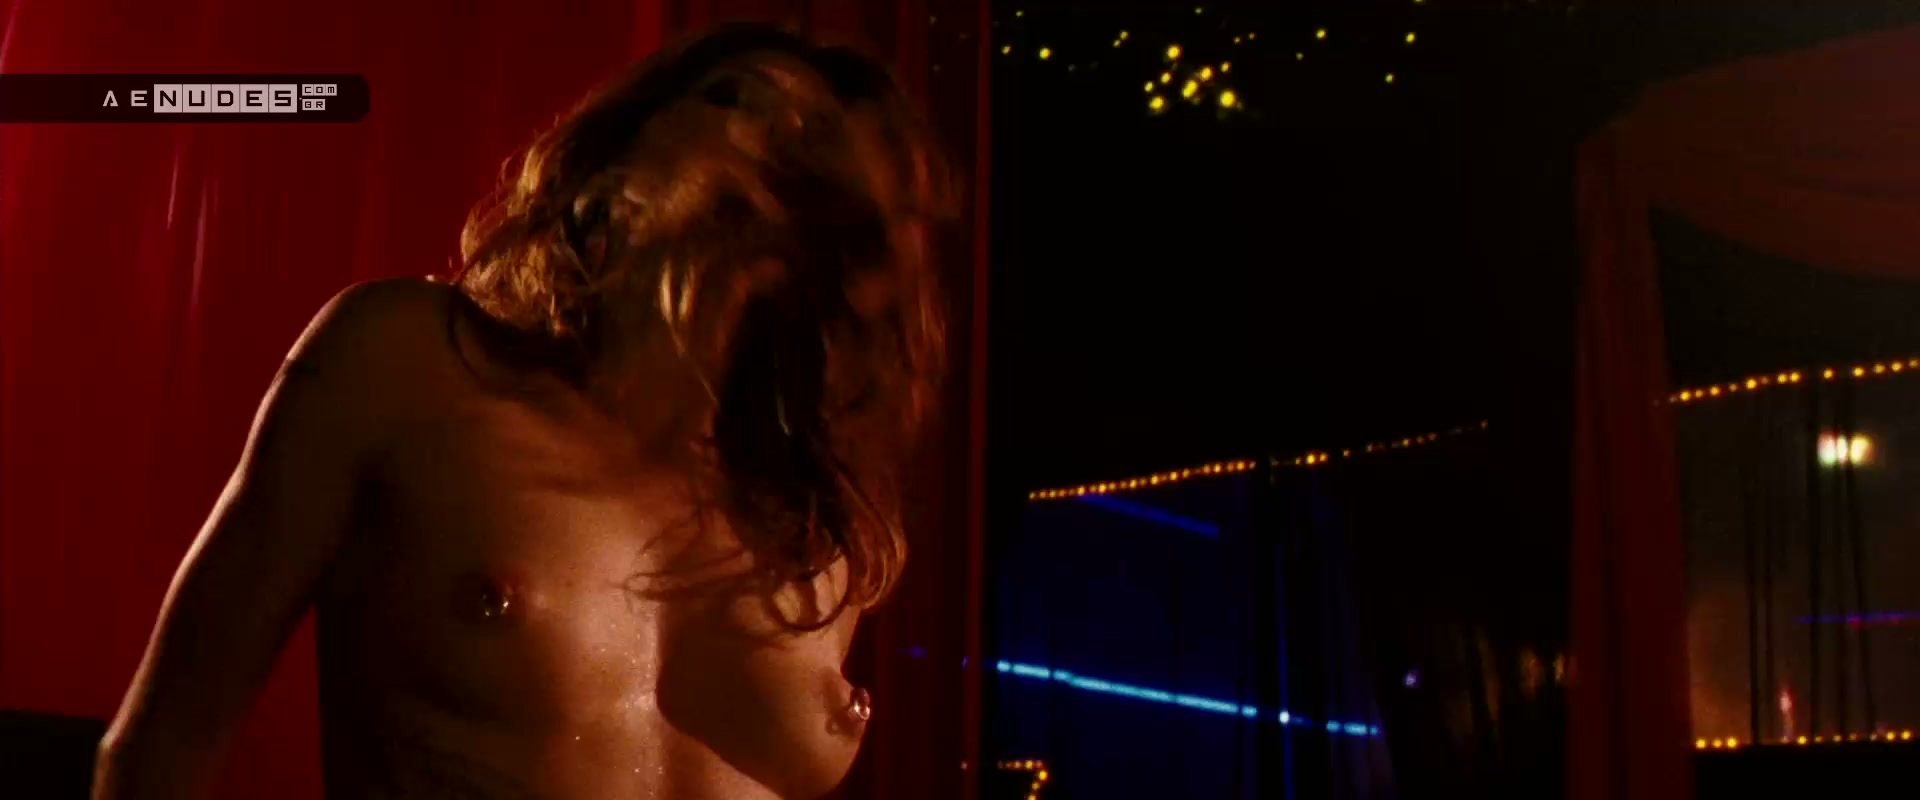  Marisa Tomei nua pelada em The Wrestler